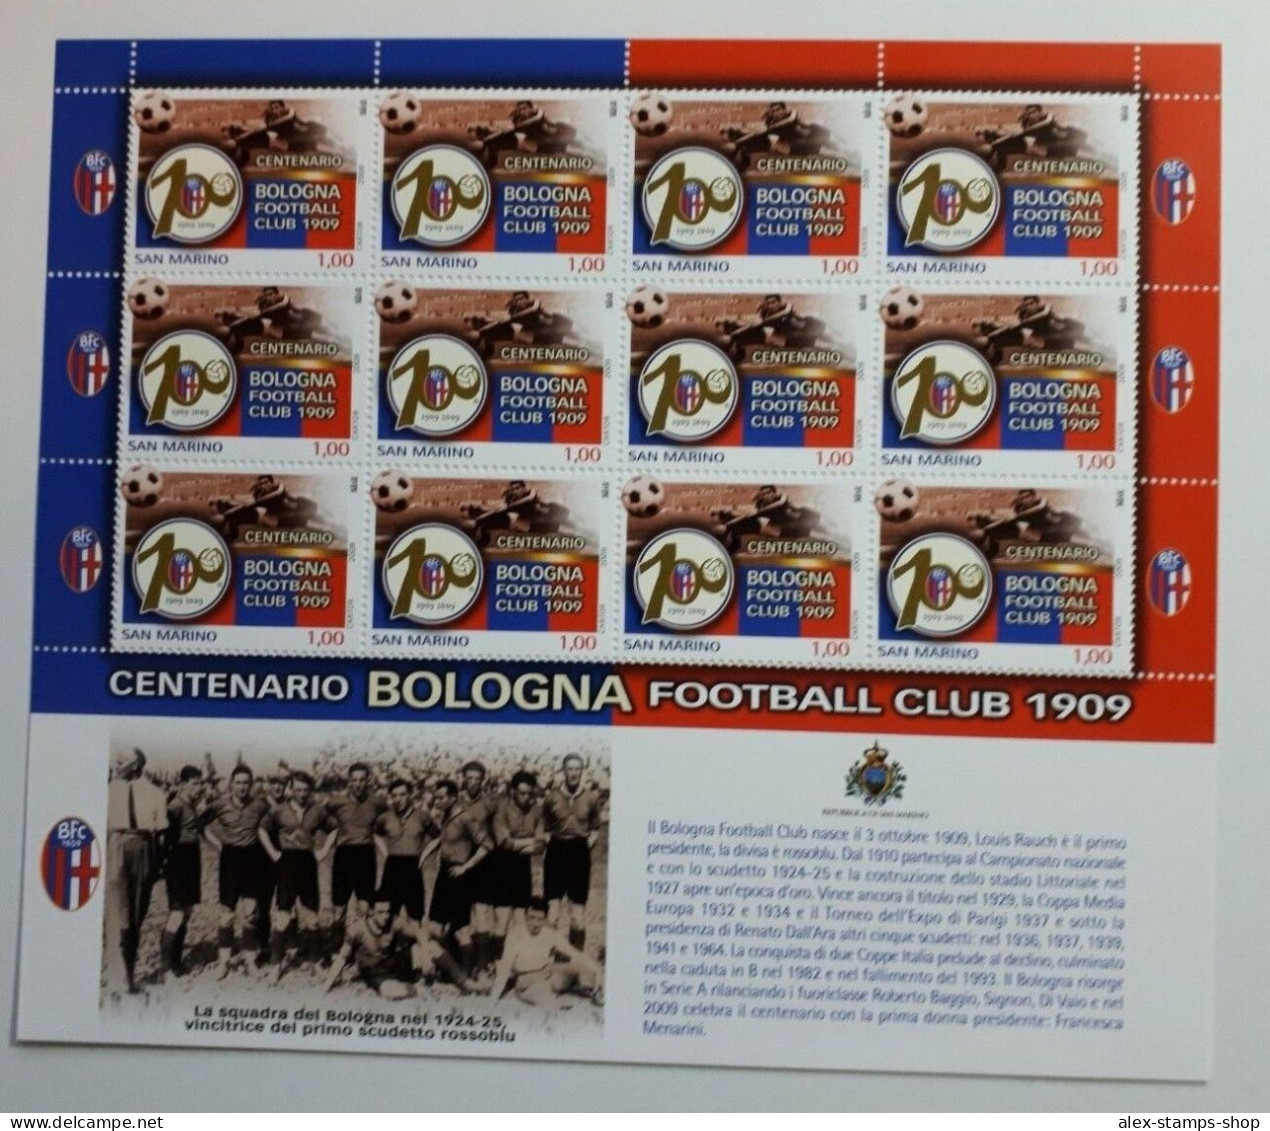 SAN MARINO 2009 MINIFOGLIO - CENTENARIO BOLOGNA FOOTBALL CLUB 1909 NEW SHEET - Blocks & Sheetlets